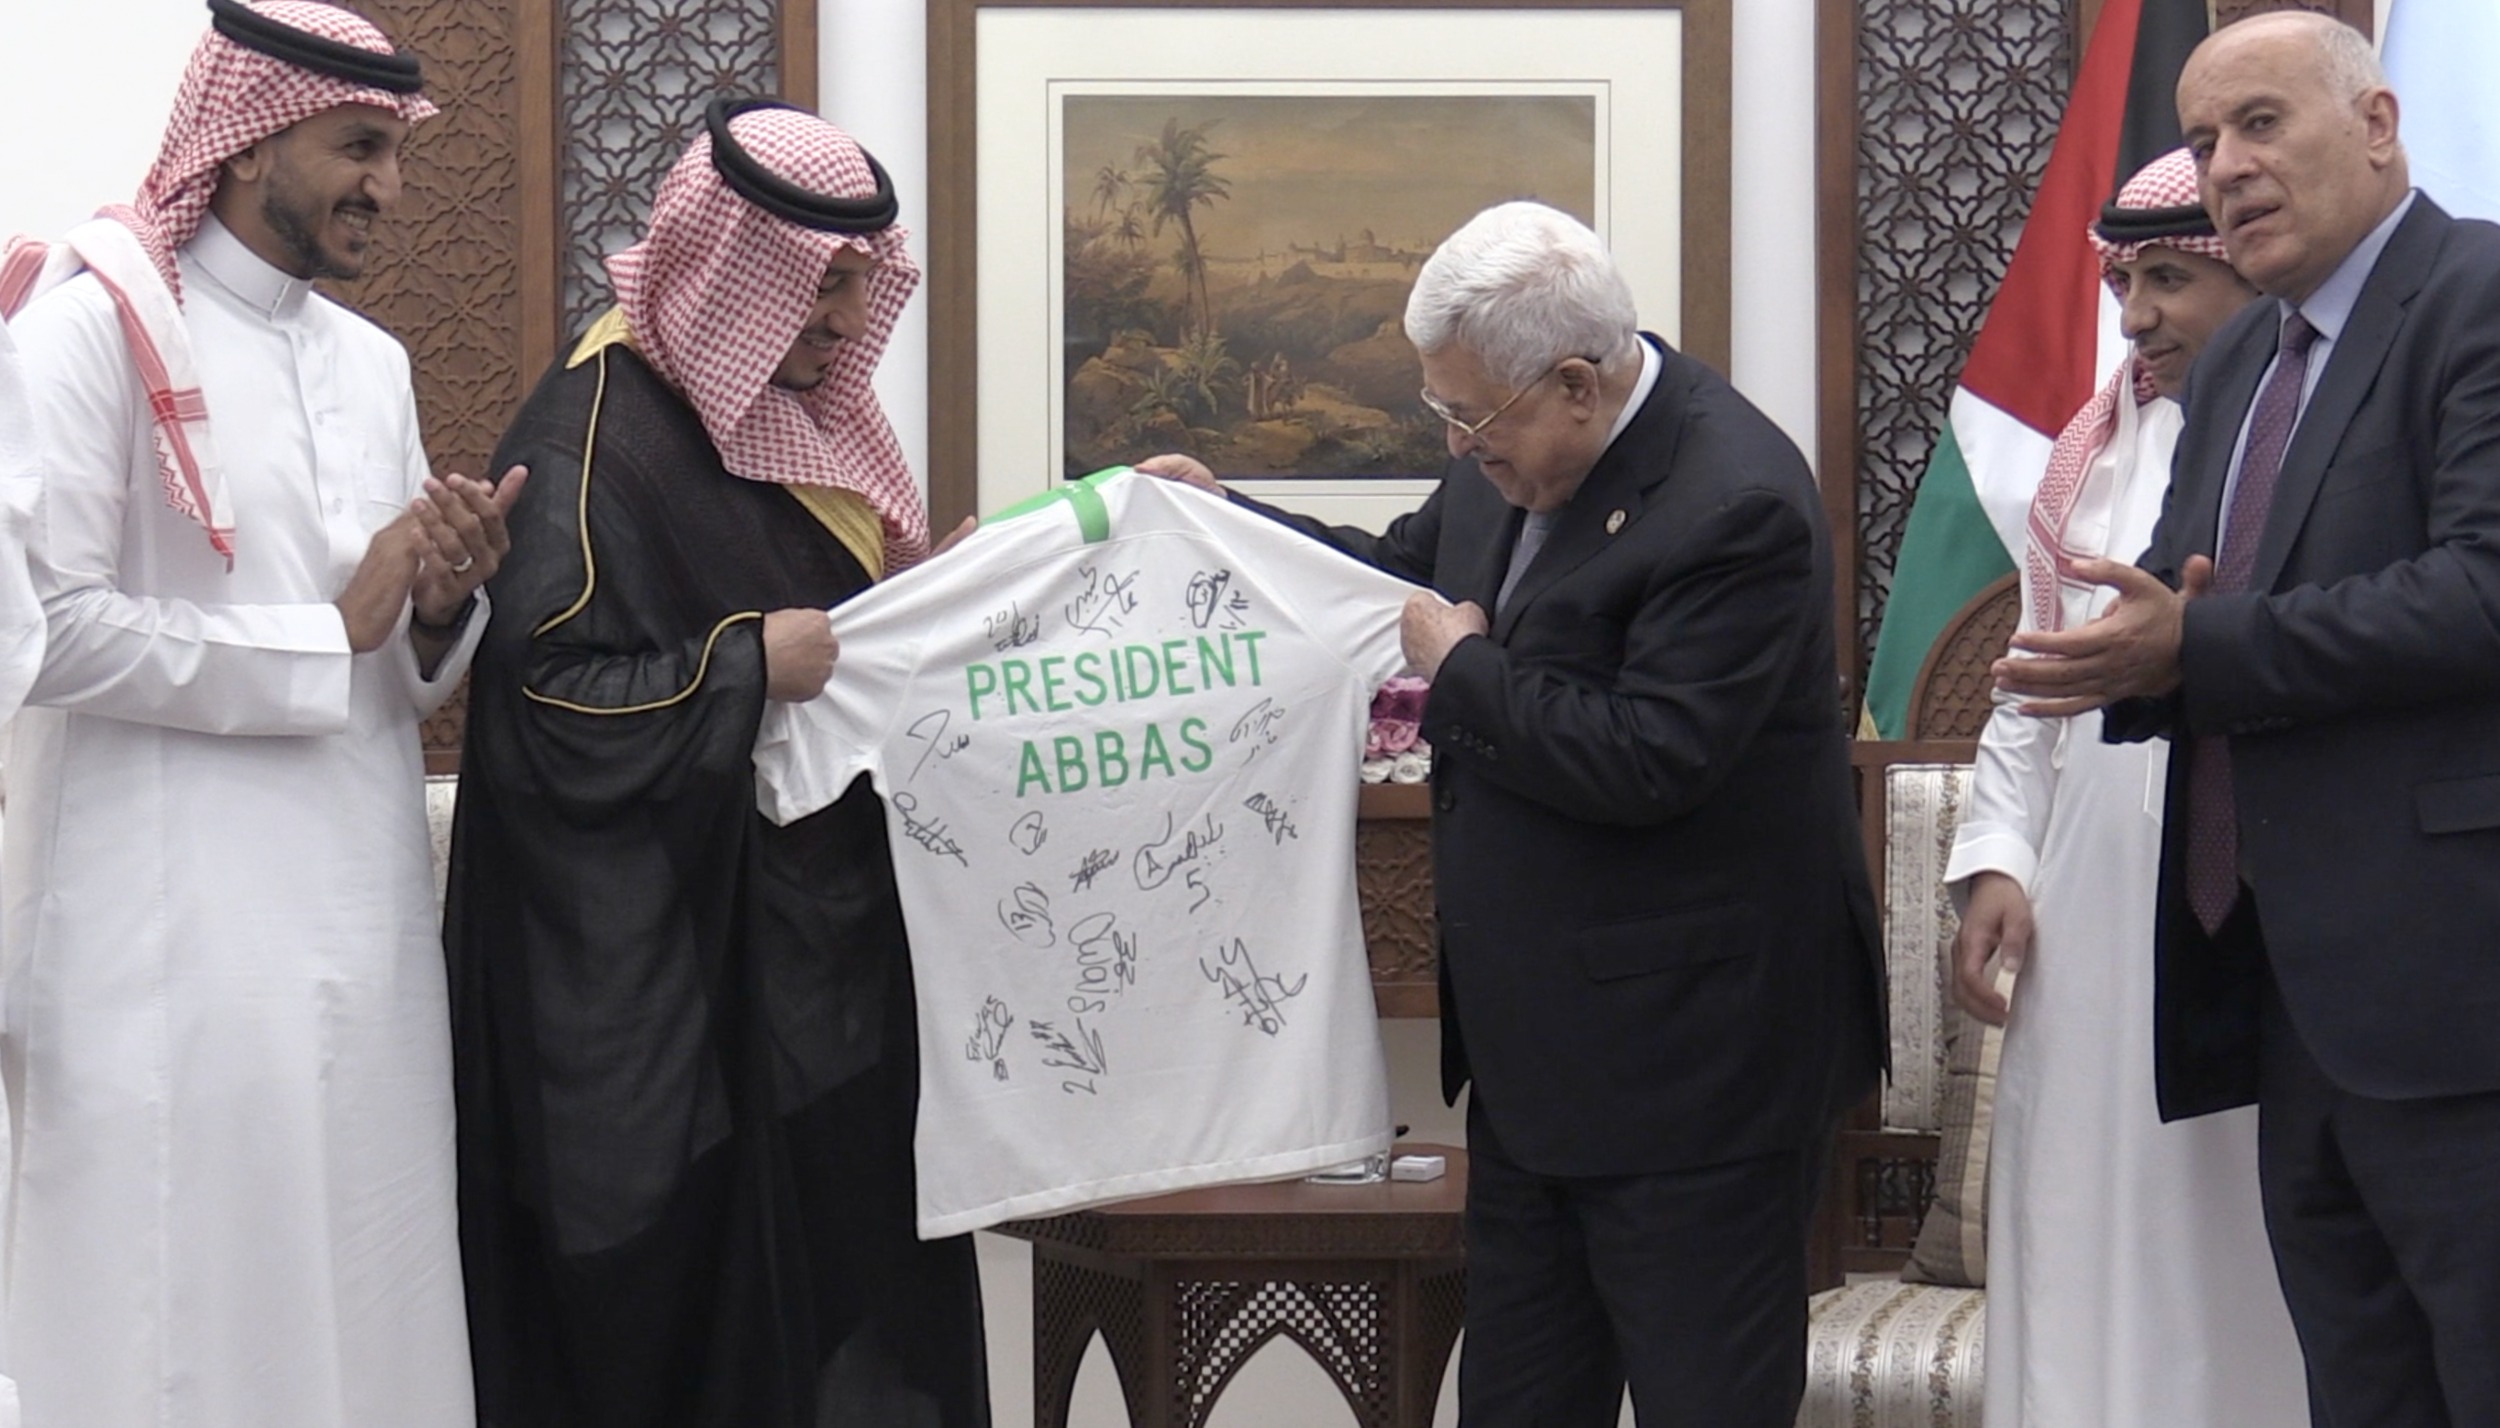 The Saudi delegation hand Mahmoud Abbas a signed jersey (MEE/Hisham Abu Shaqra)